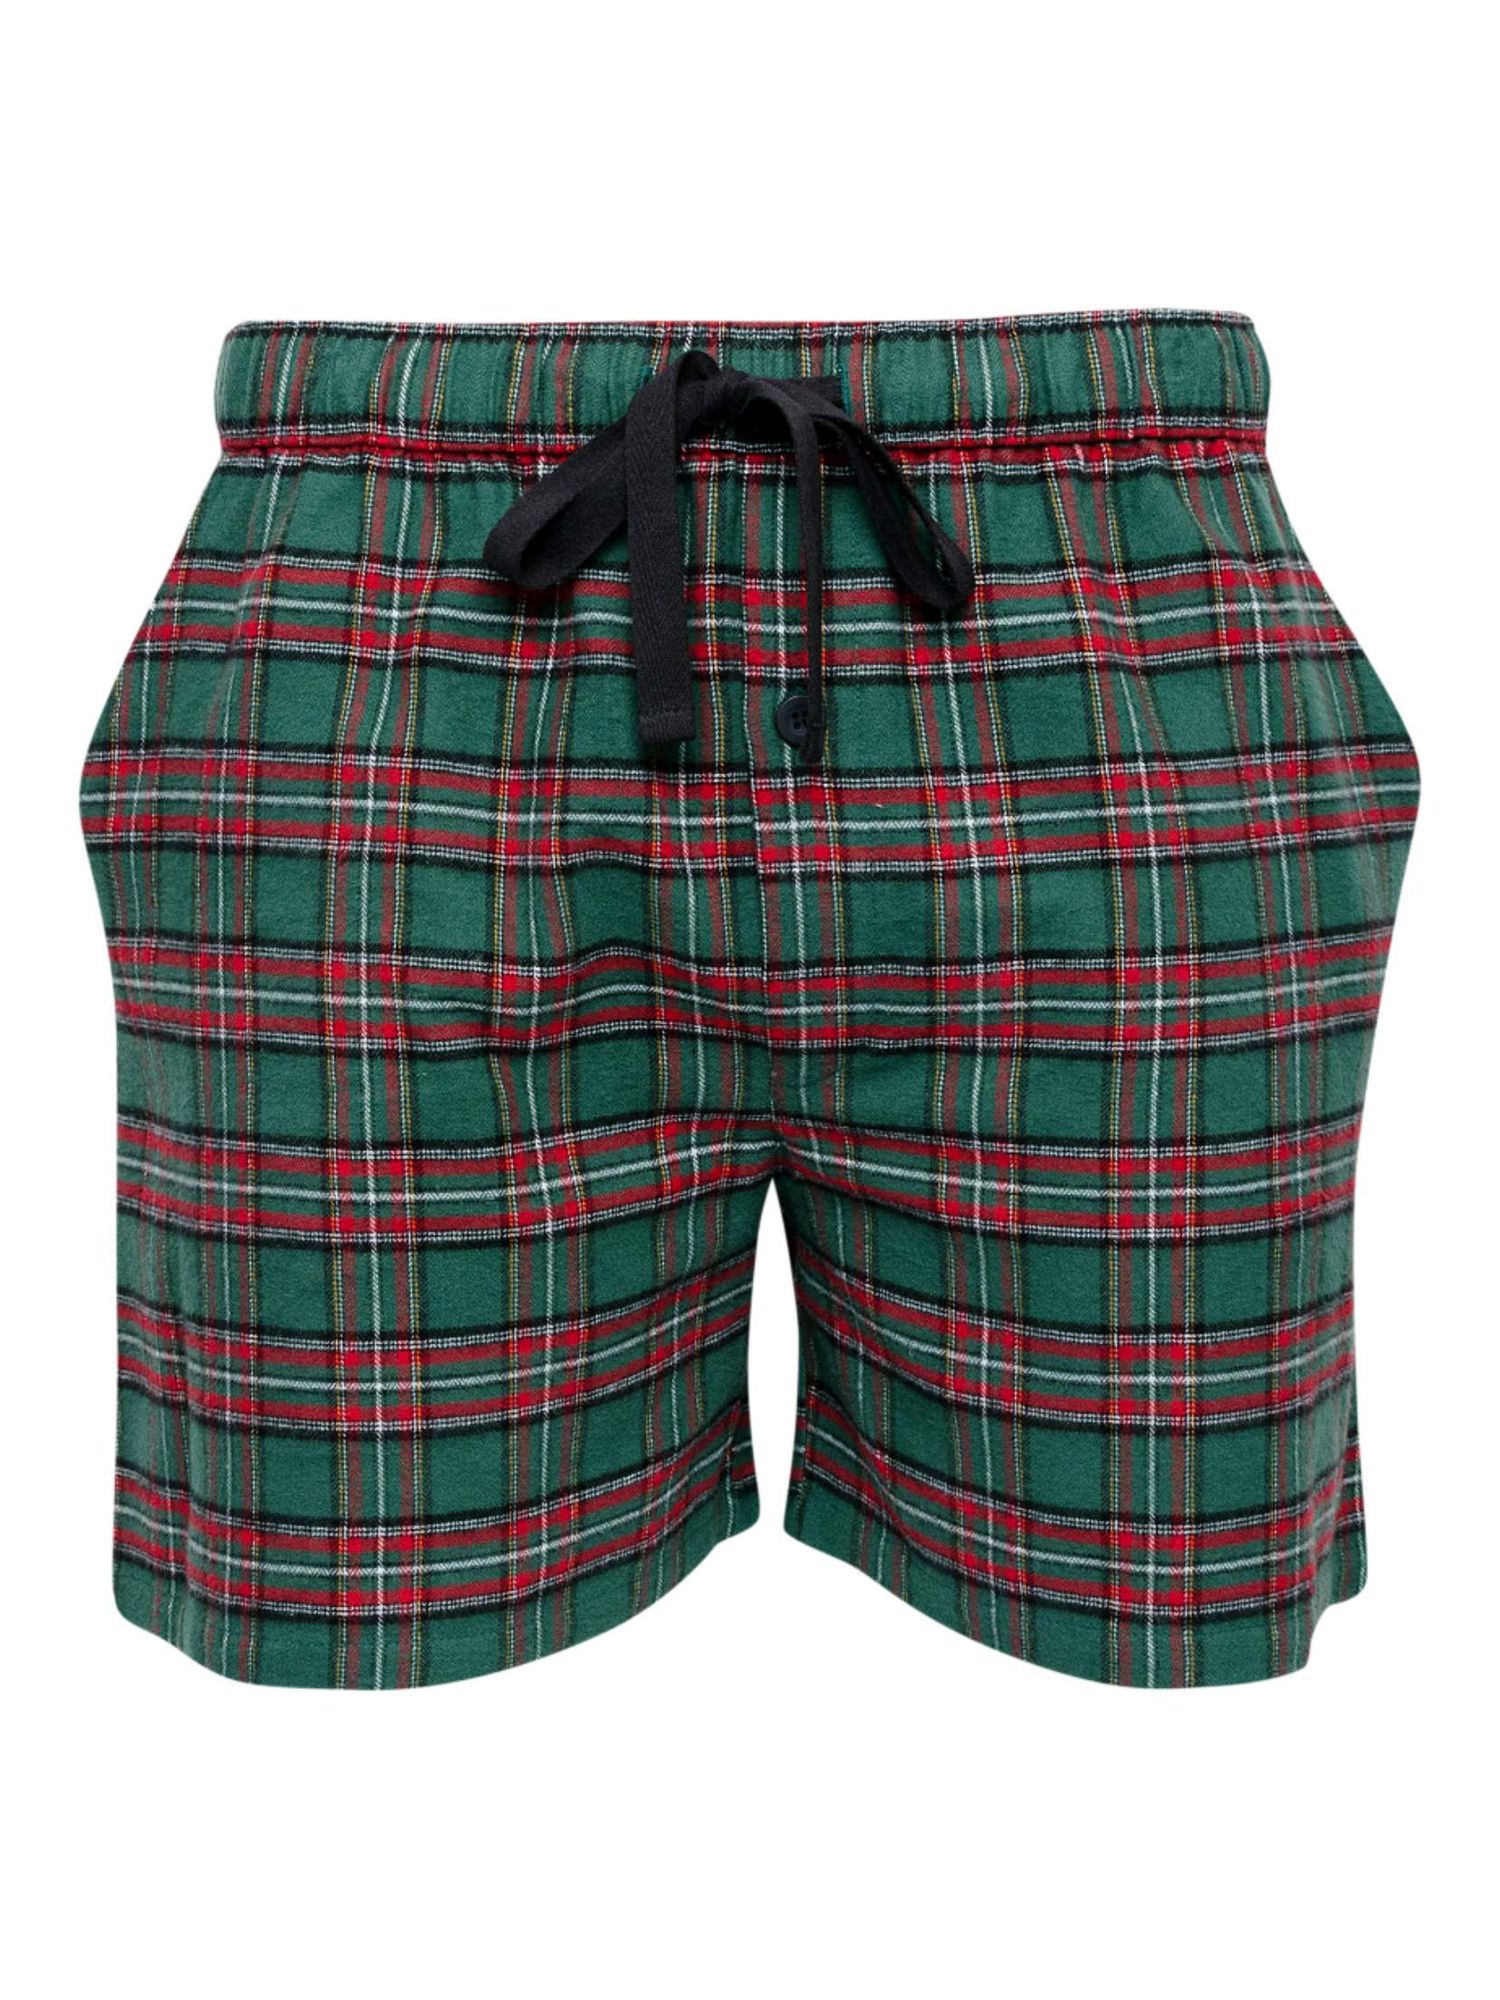 Buy Cyberjammies Whistler Check Pyjama Shorts, Dark Green/Red Online at johnlewis.com